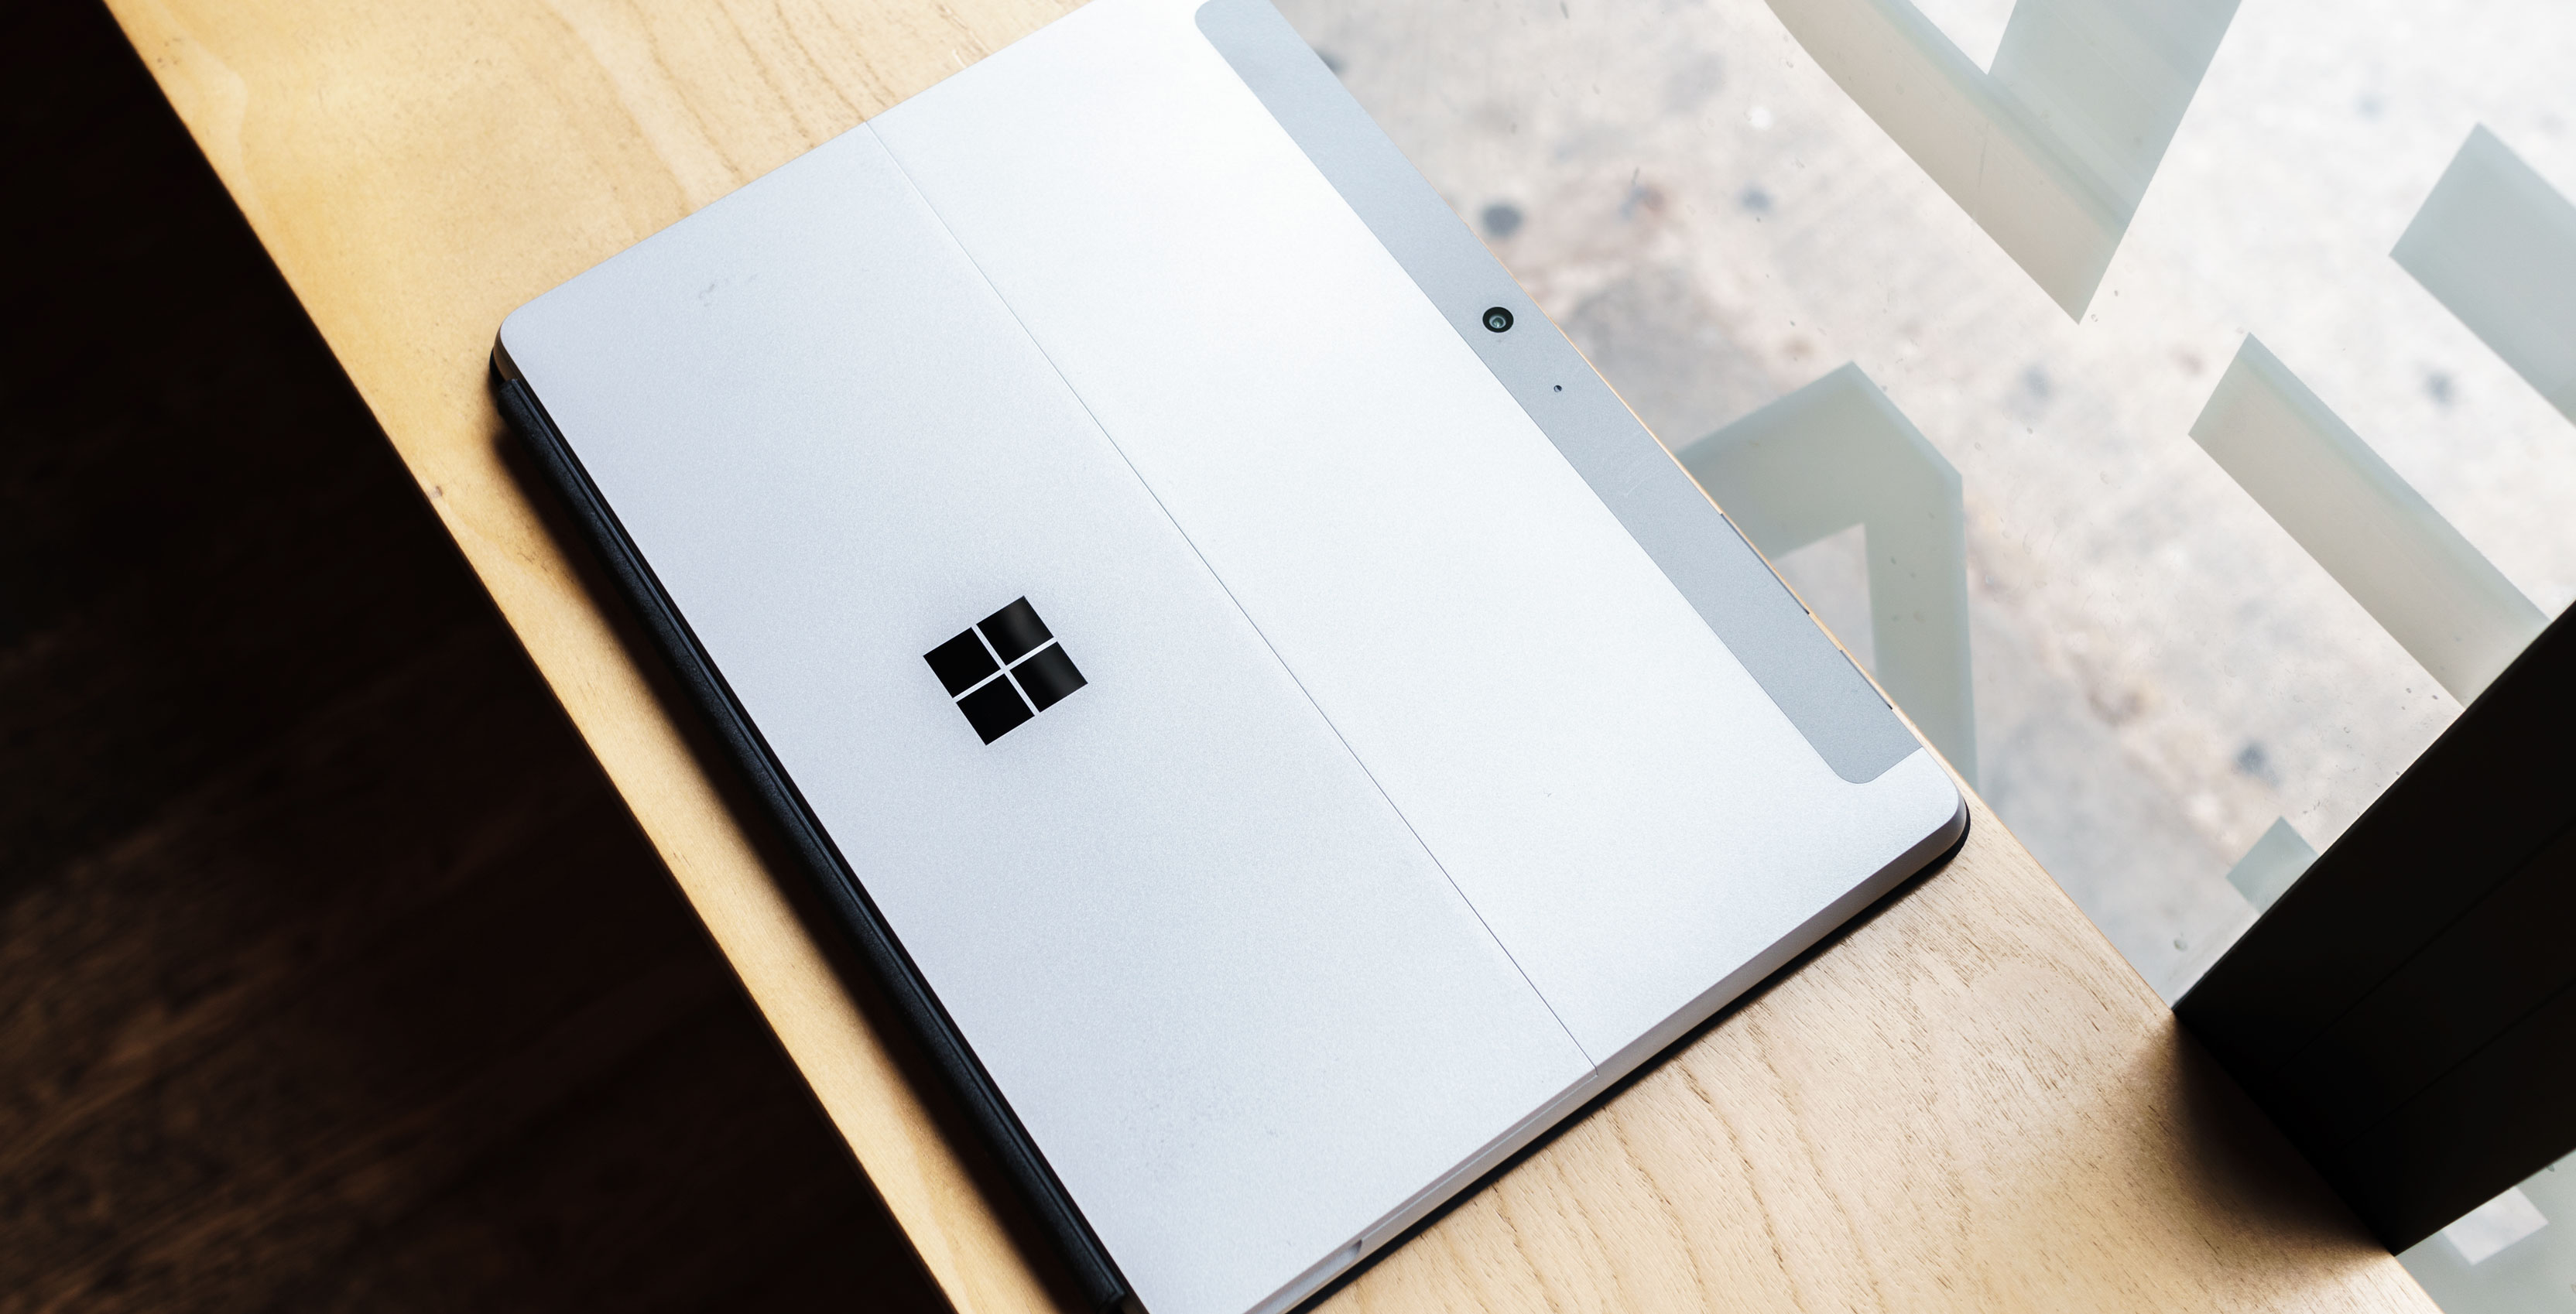 Microsoft's diminutive new Surface Go 2-in-1